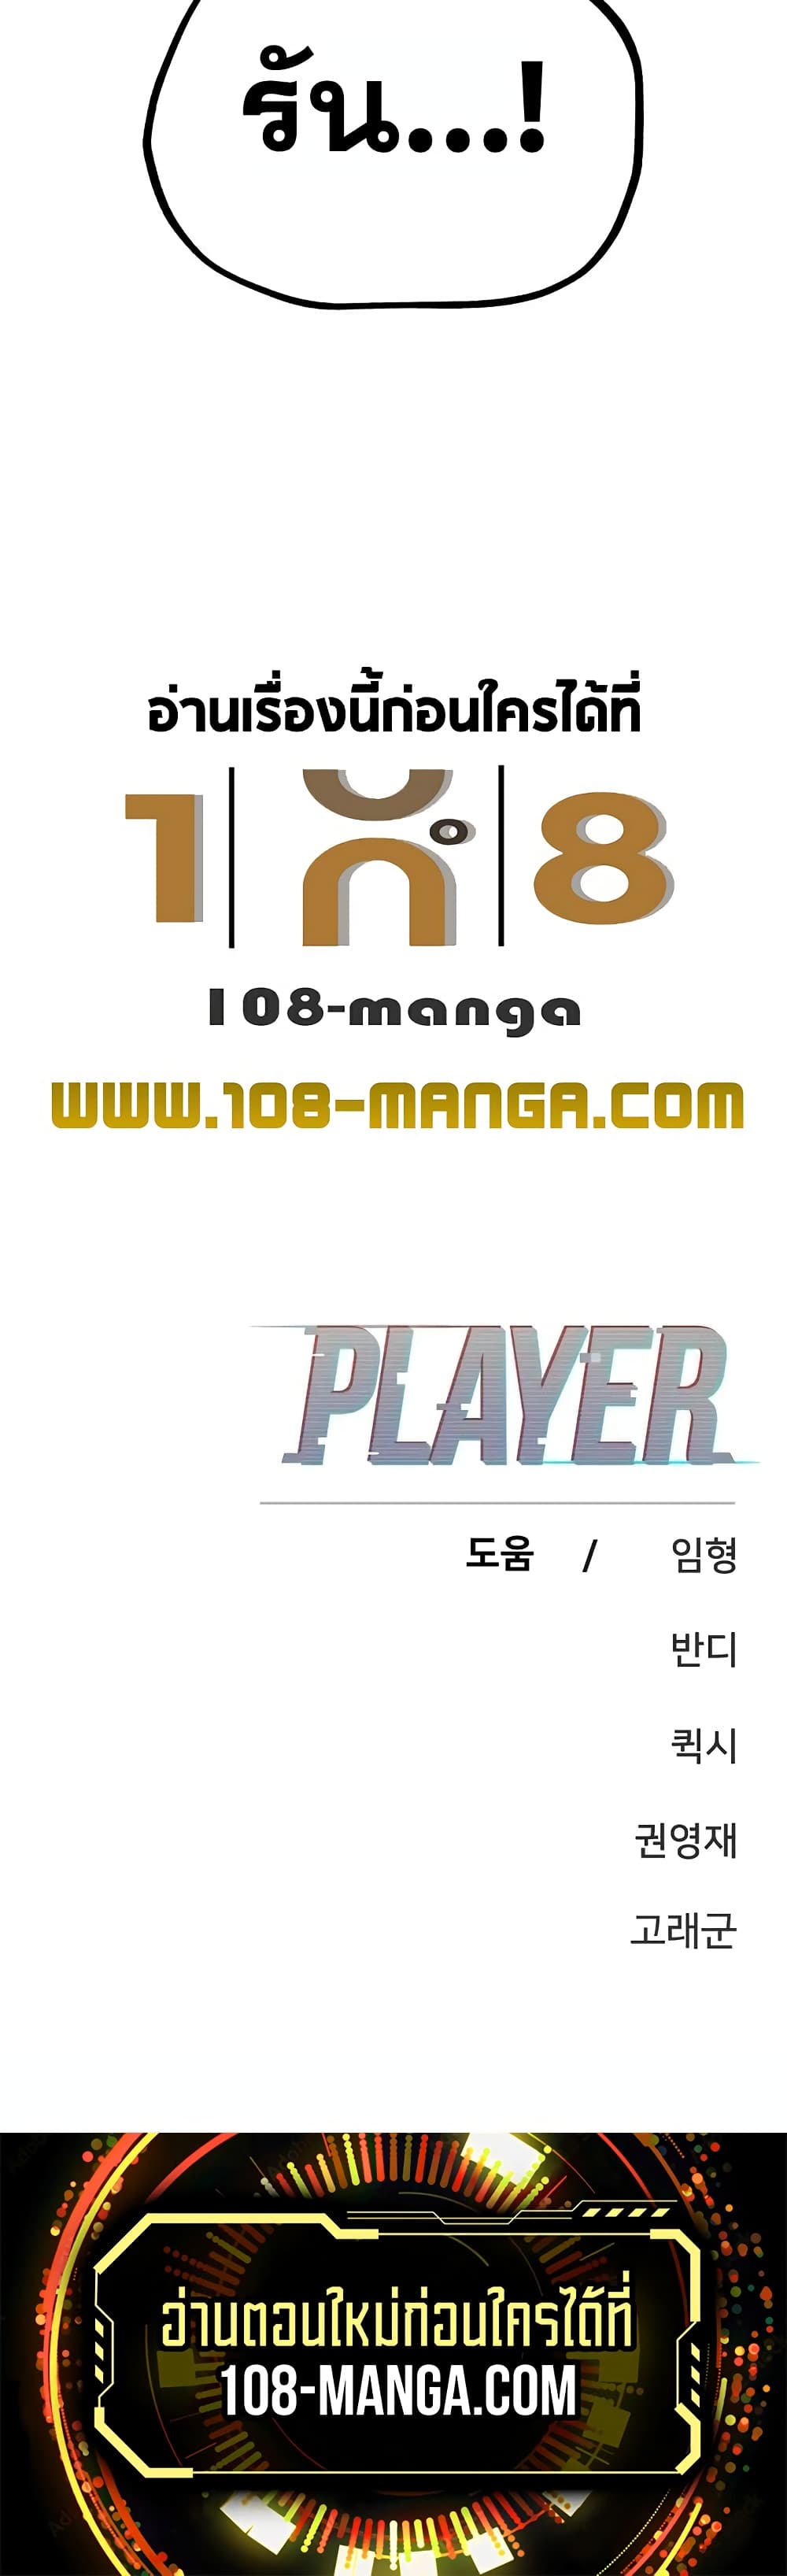 Player 130 60